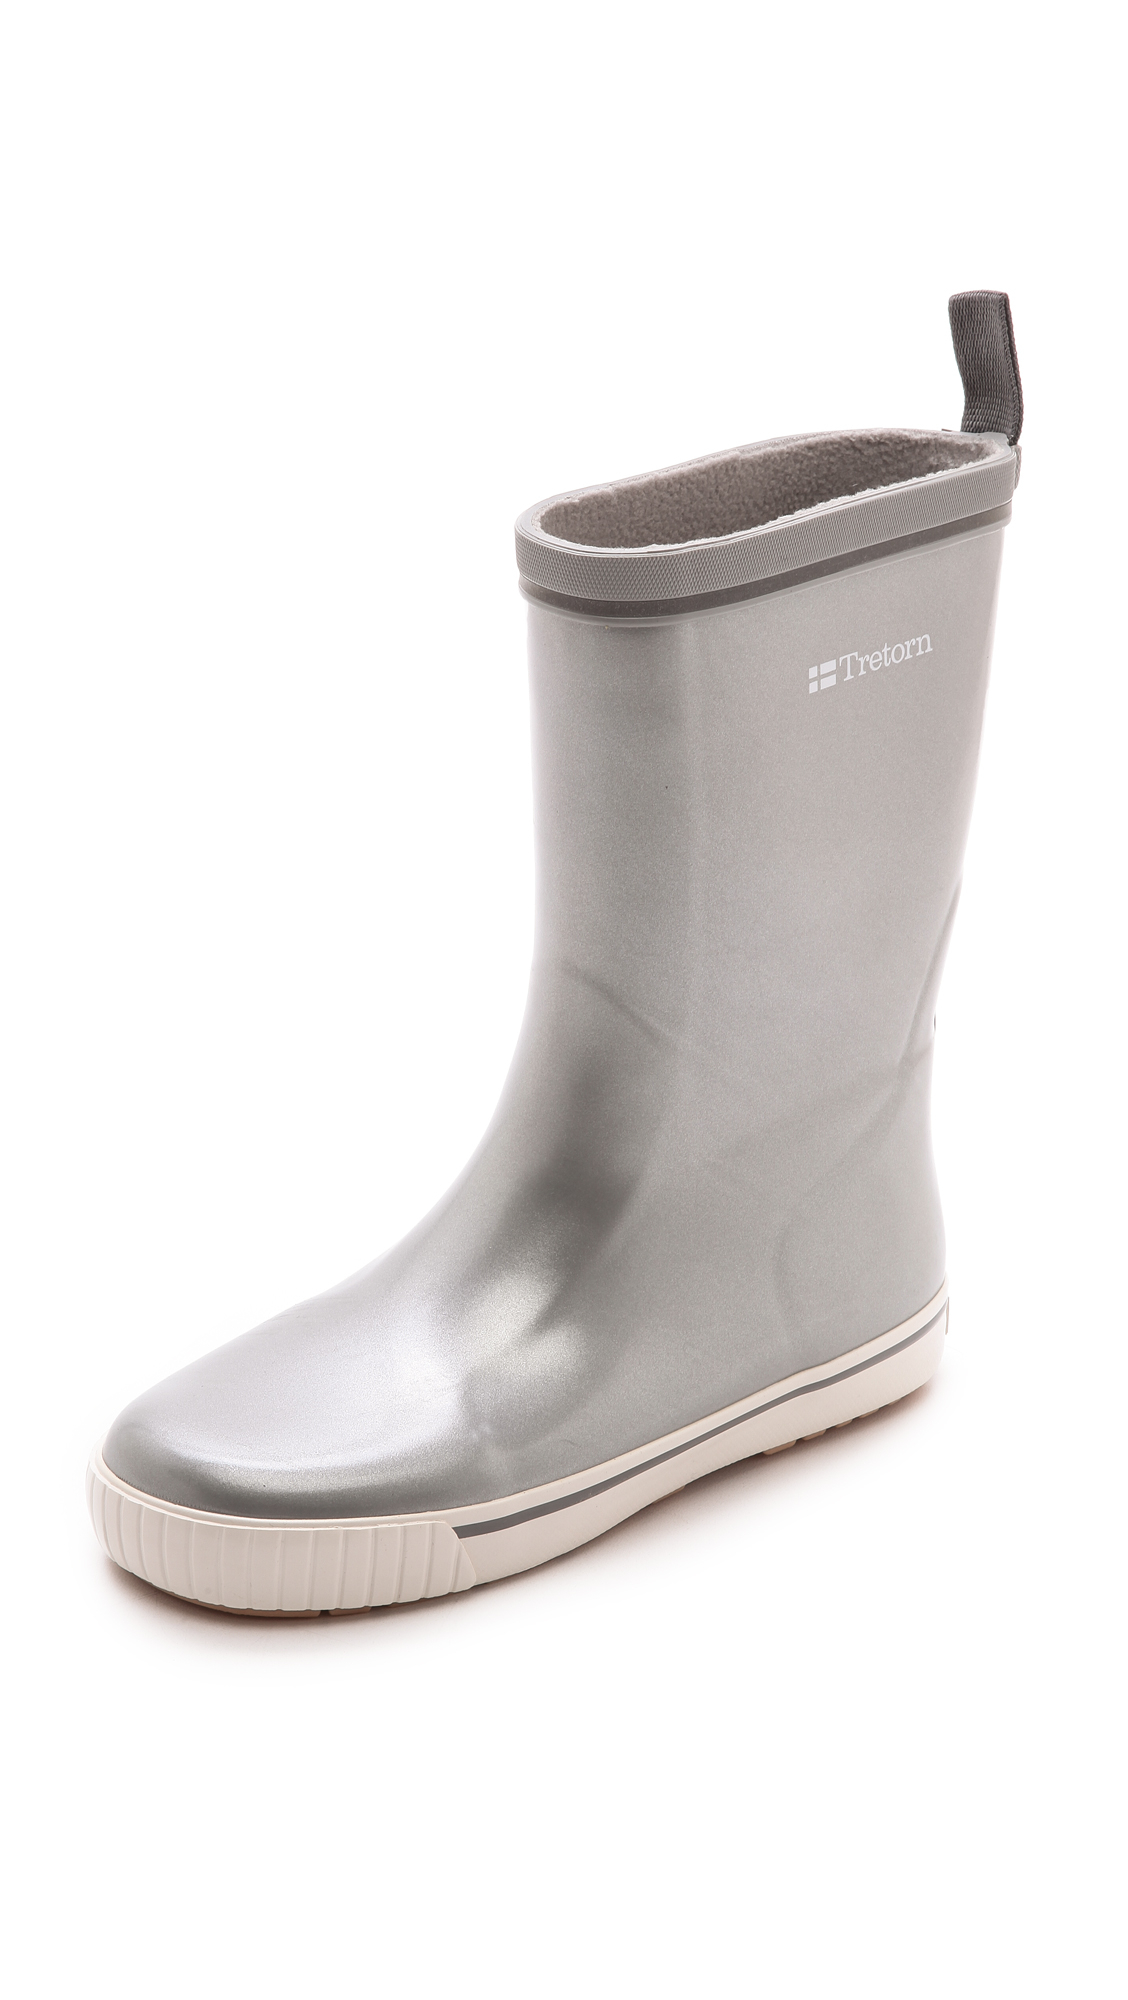 Tretorn Skerry Metallic Rain Boots - Silver | Lyst